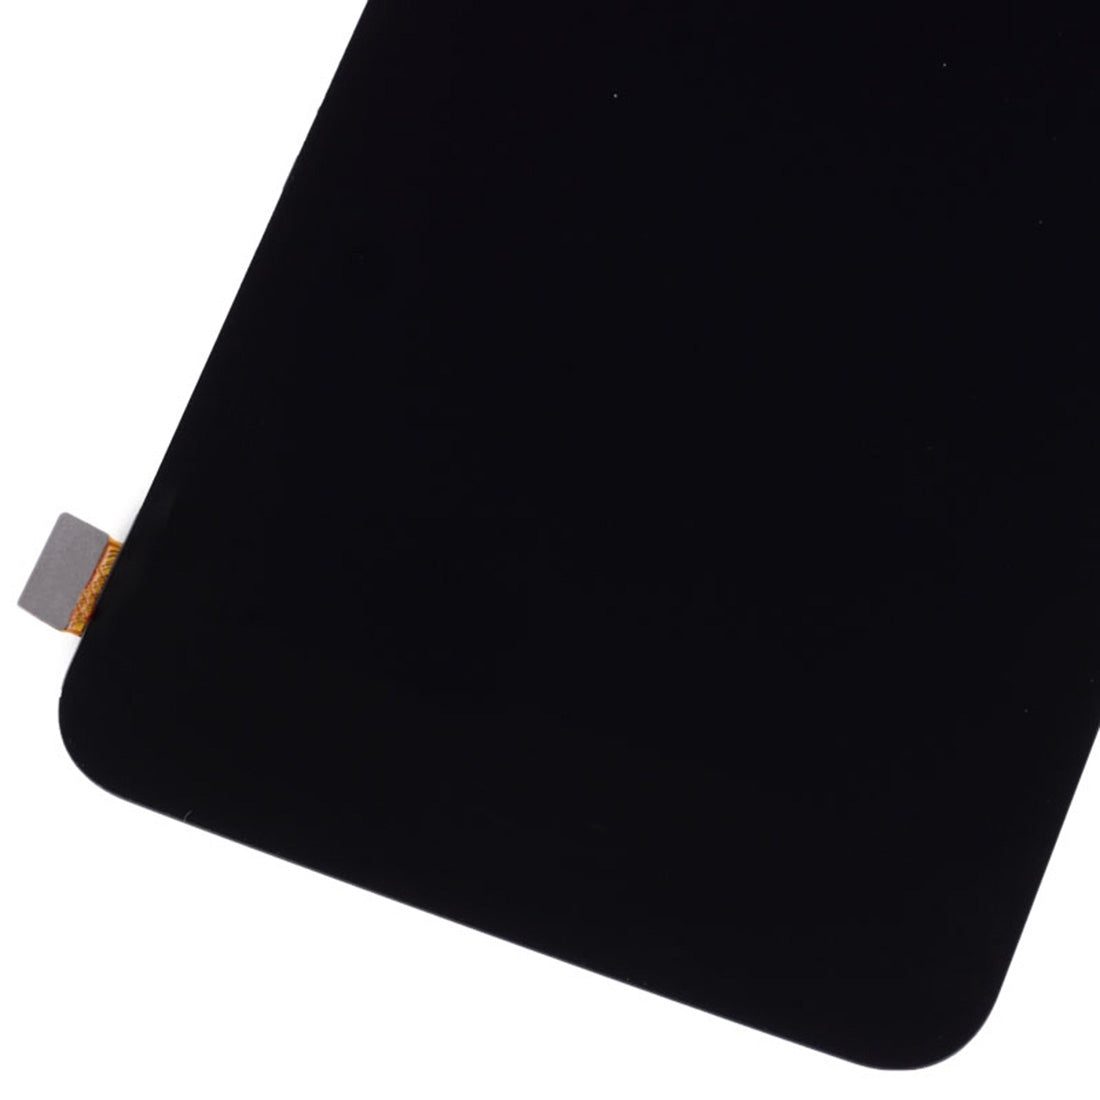 Ecran LCD + Vitre Tactile LG K4 2017 X230 X230DSF Noir